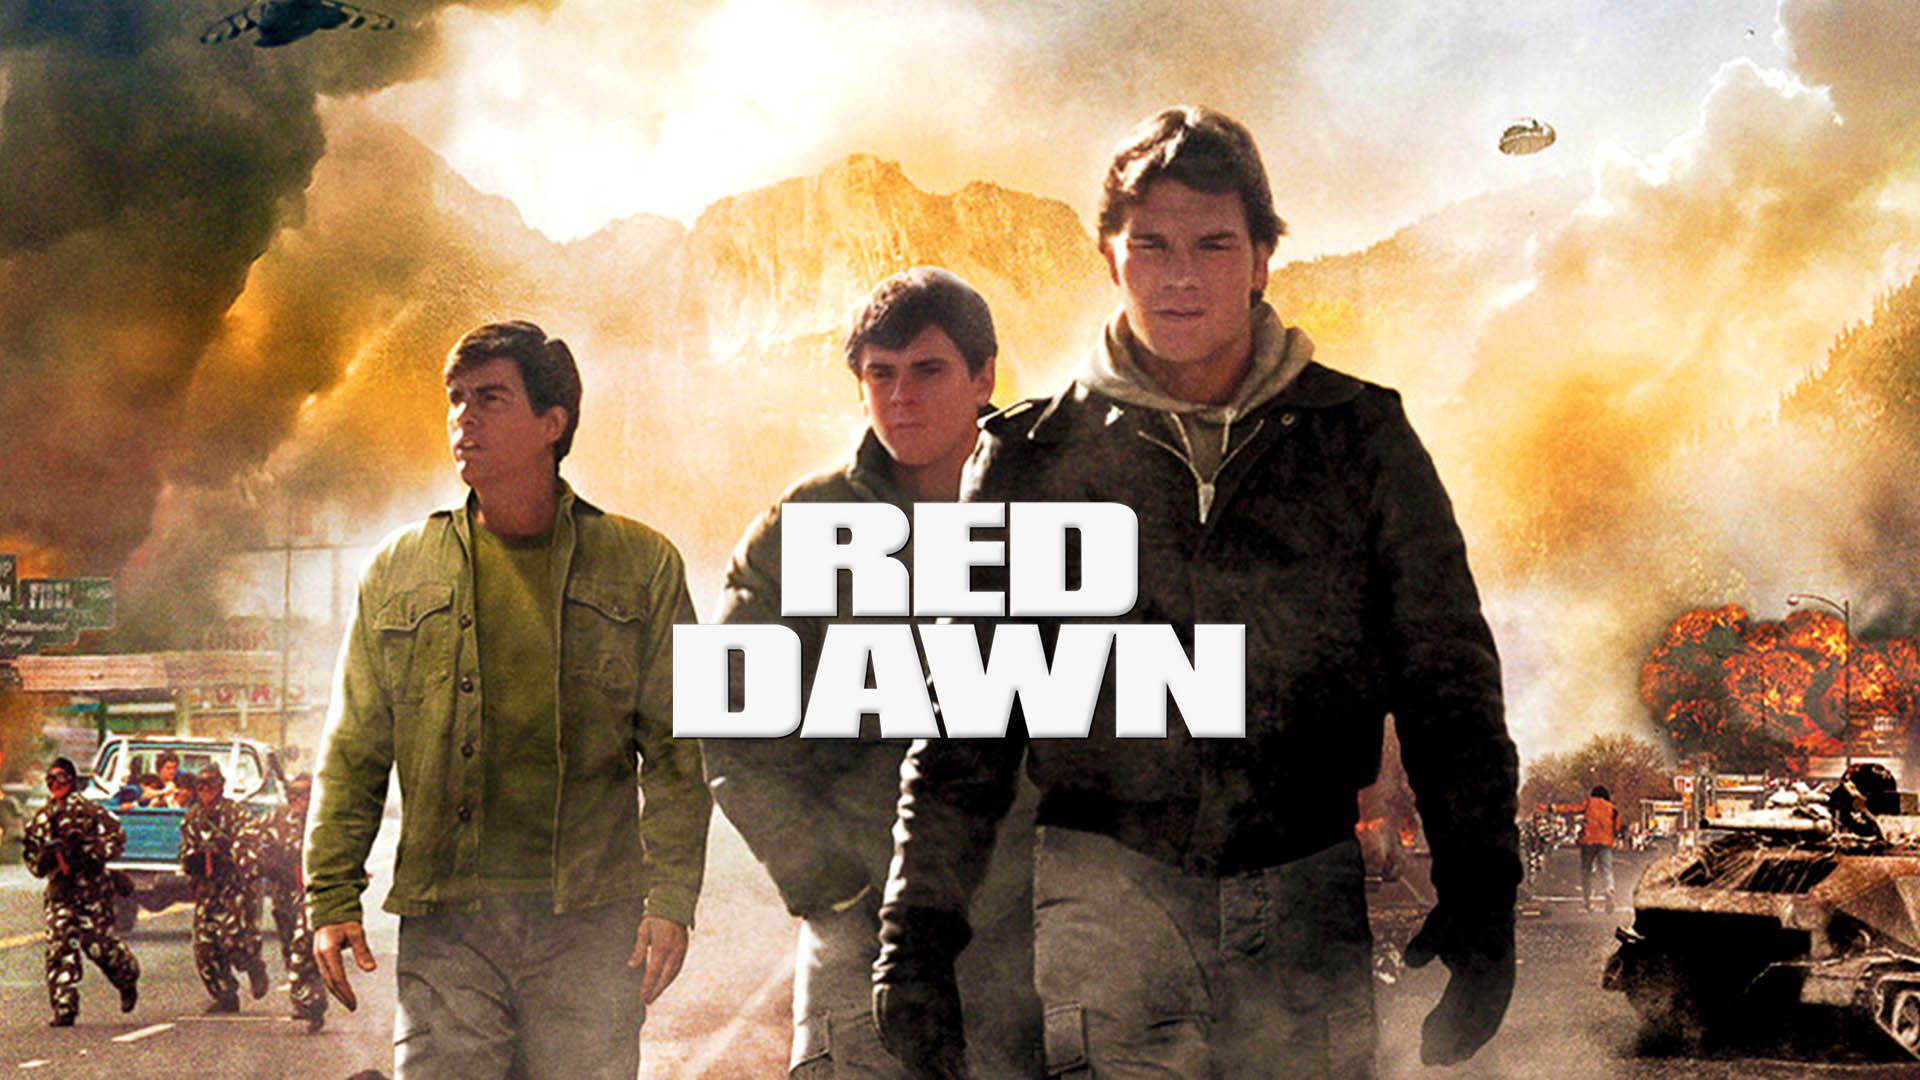 Watch Red Dawn Online | Stream Full Movies